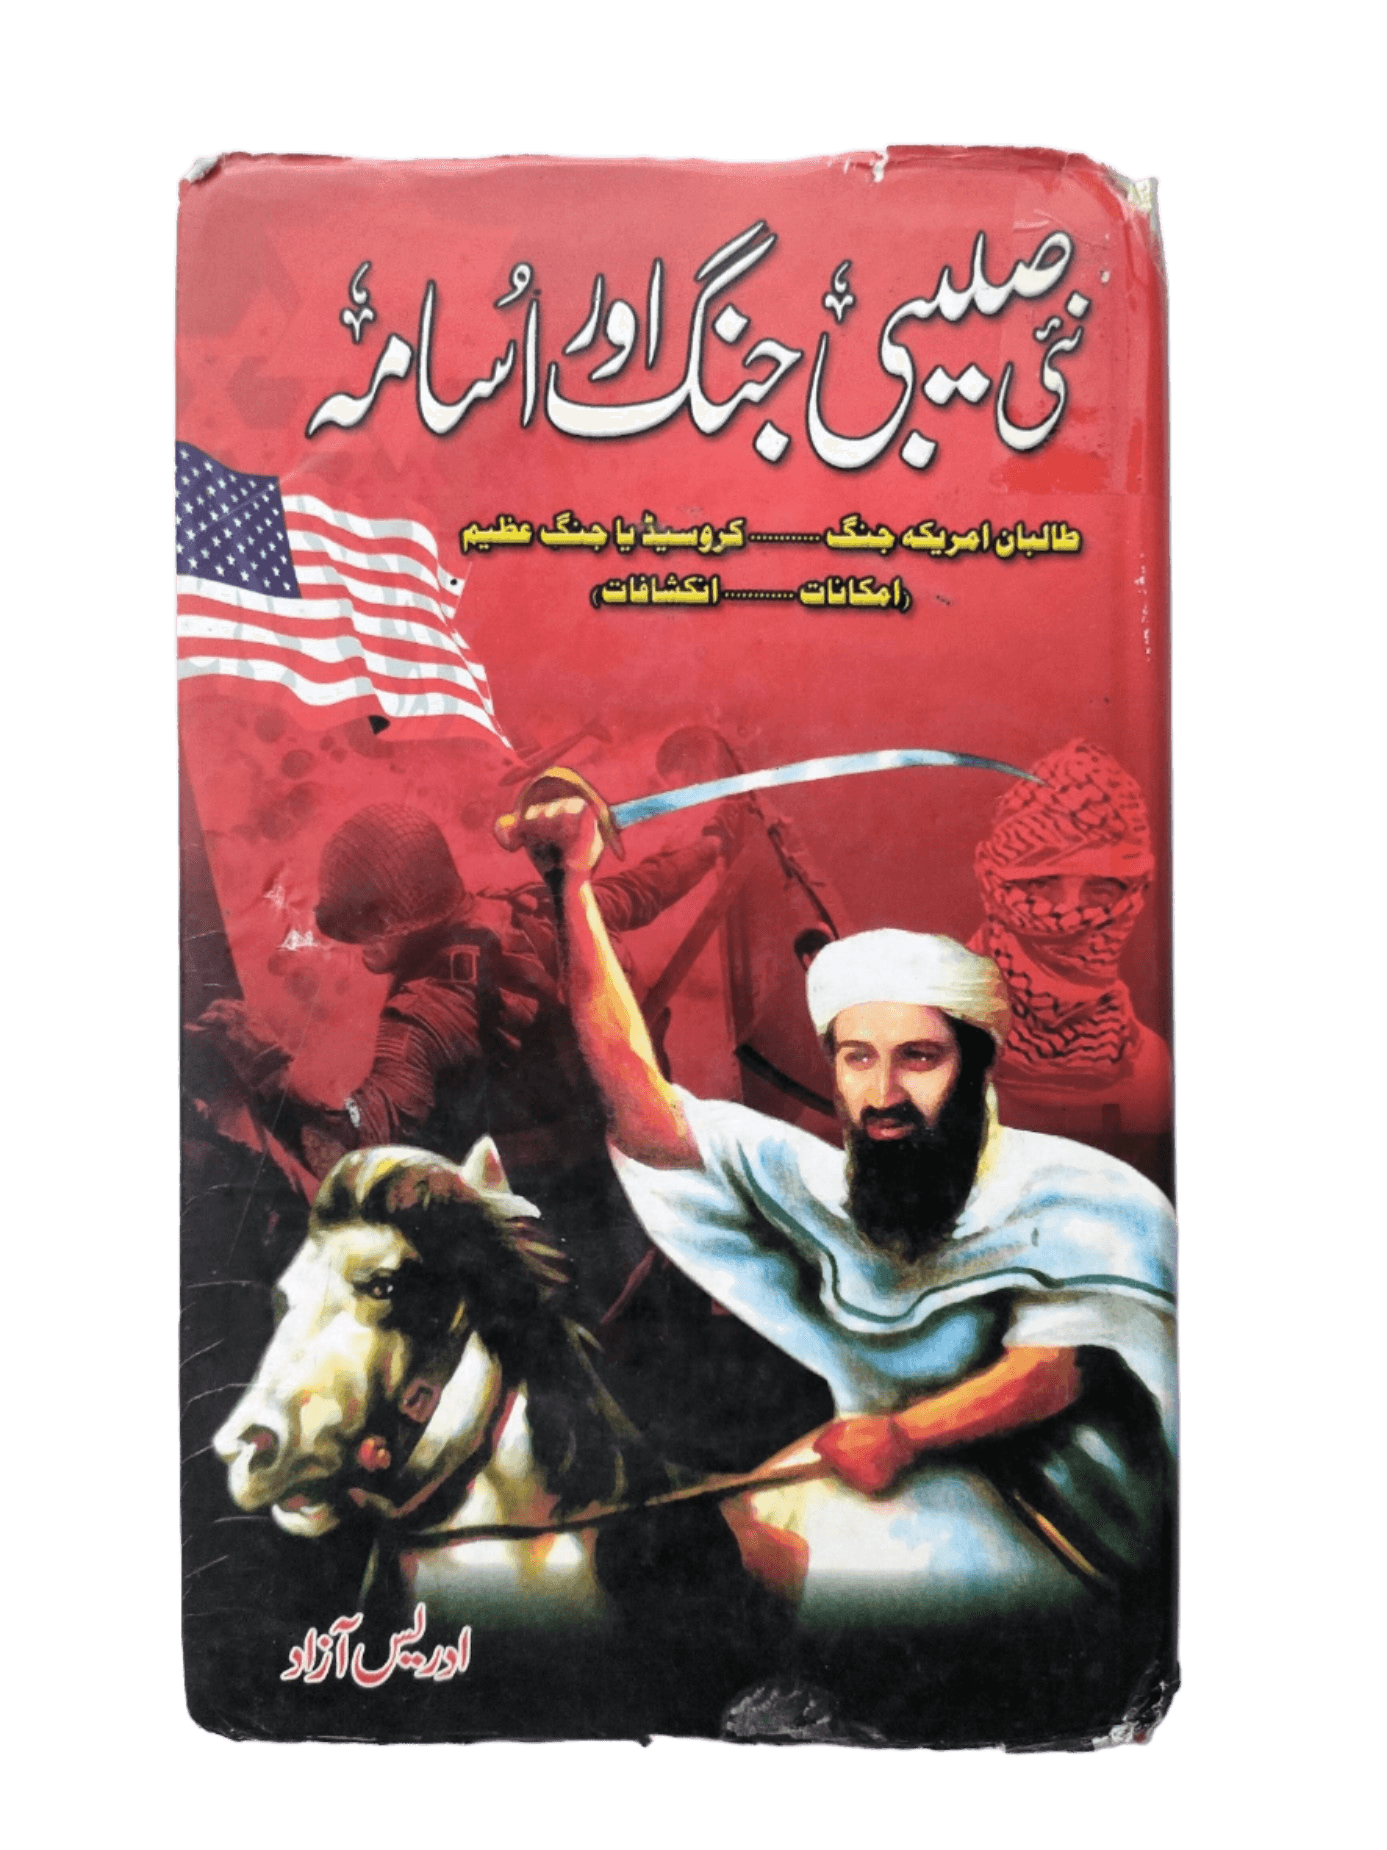 Nayi Salebi Jang Aur Usama (The New Crusade and Osama) - KHAJISTAN™